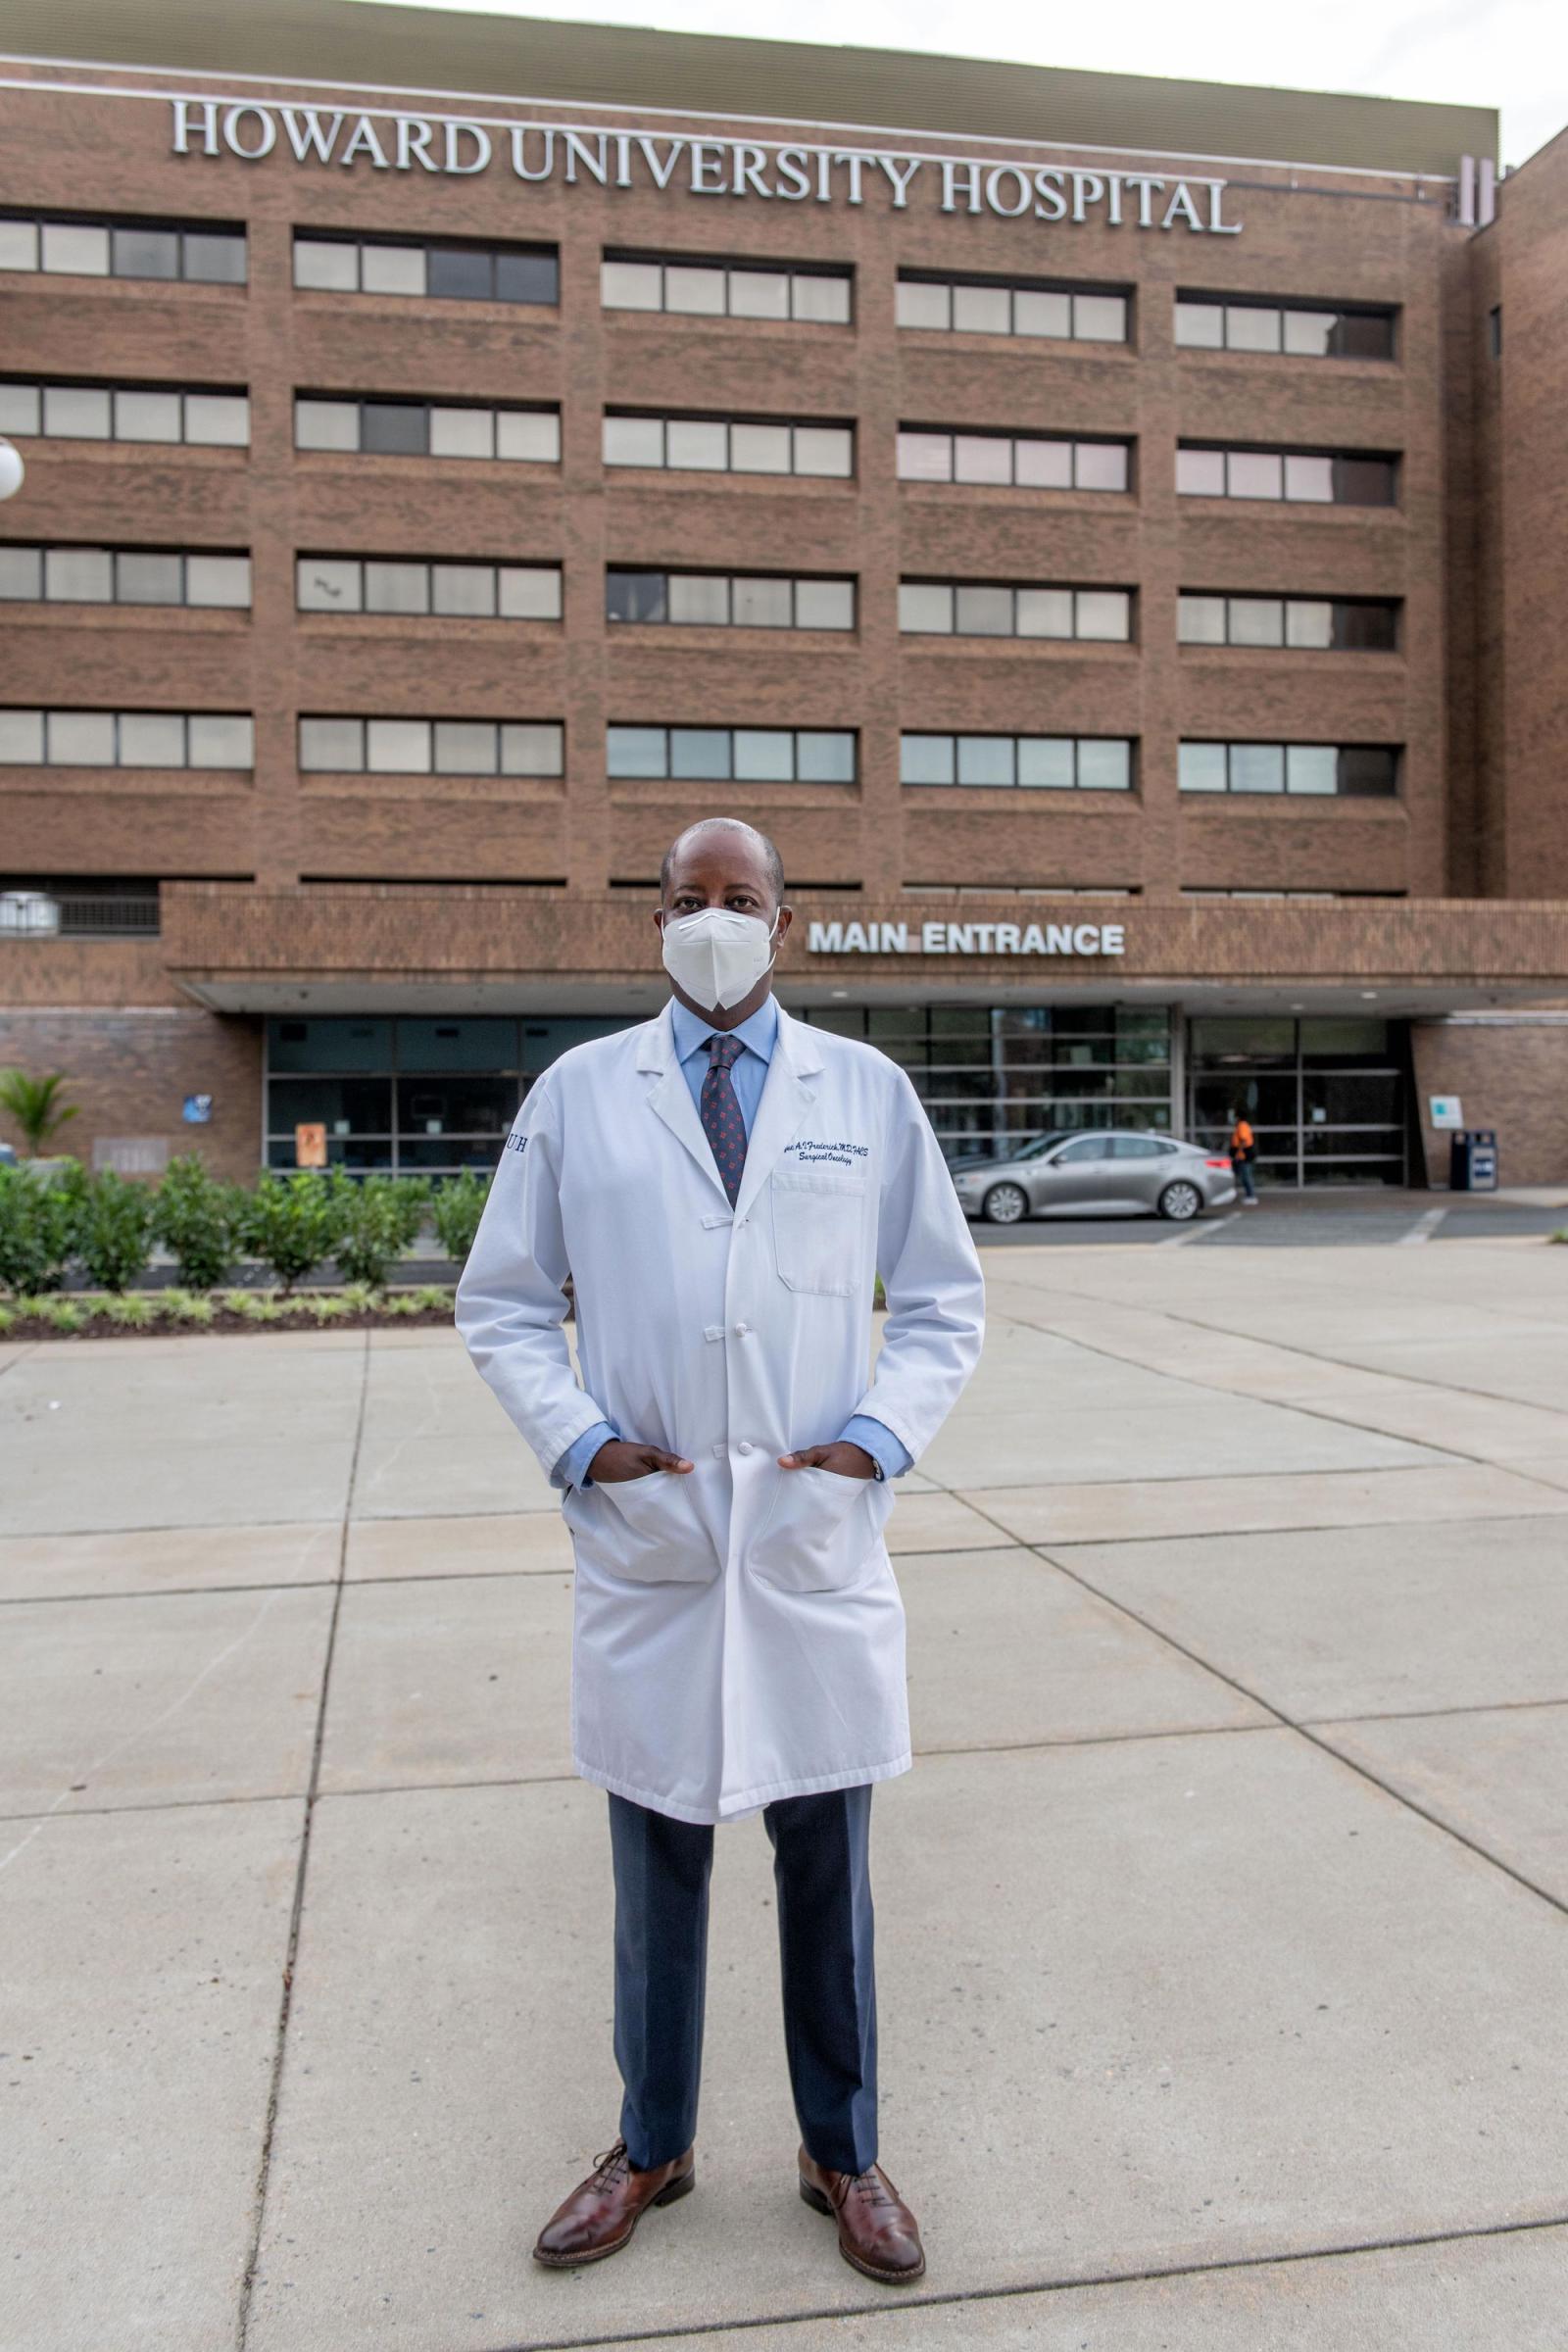 Dr. Frederick in front of Howard University Hospital